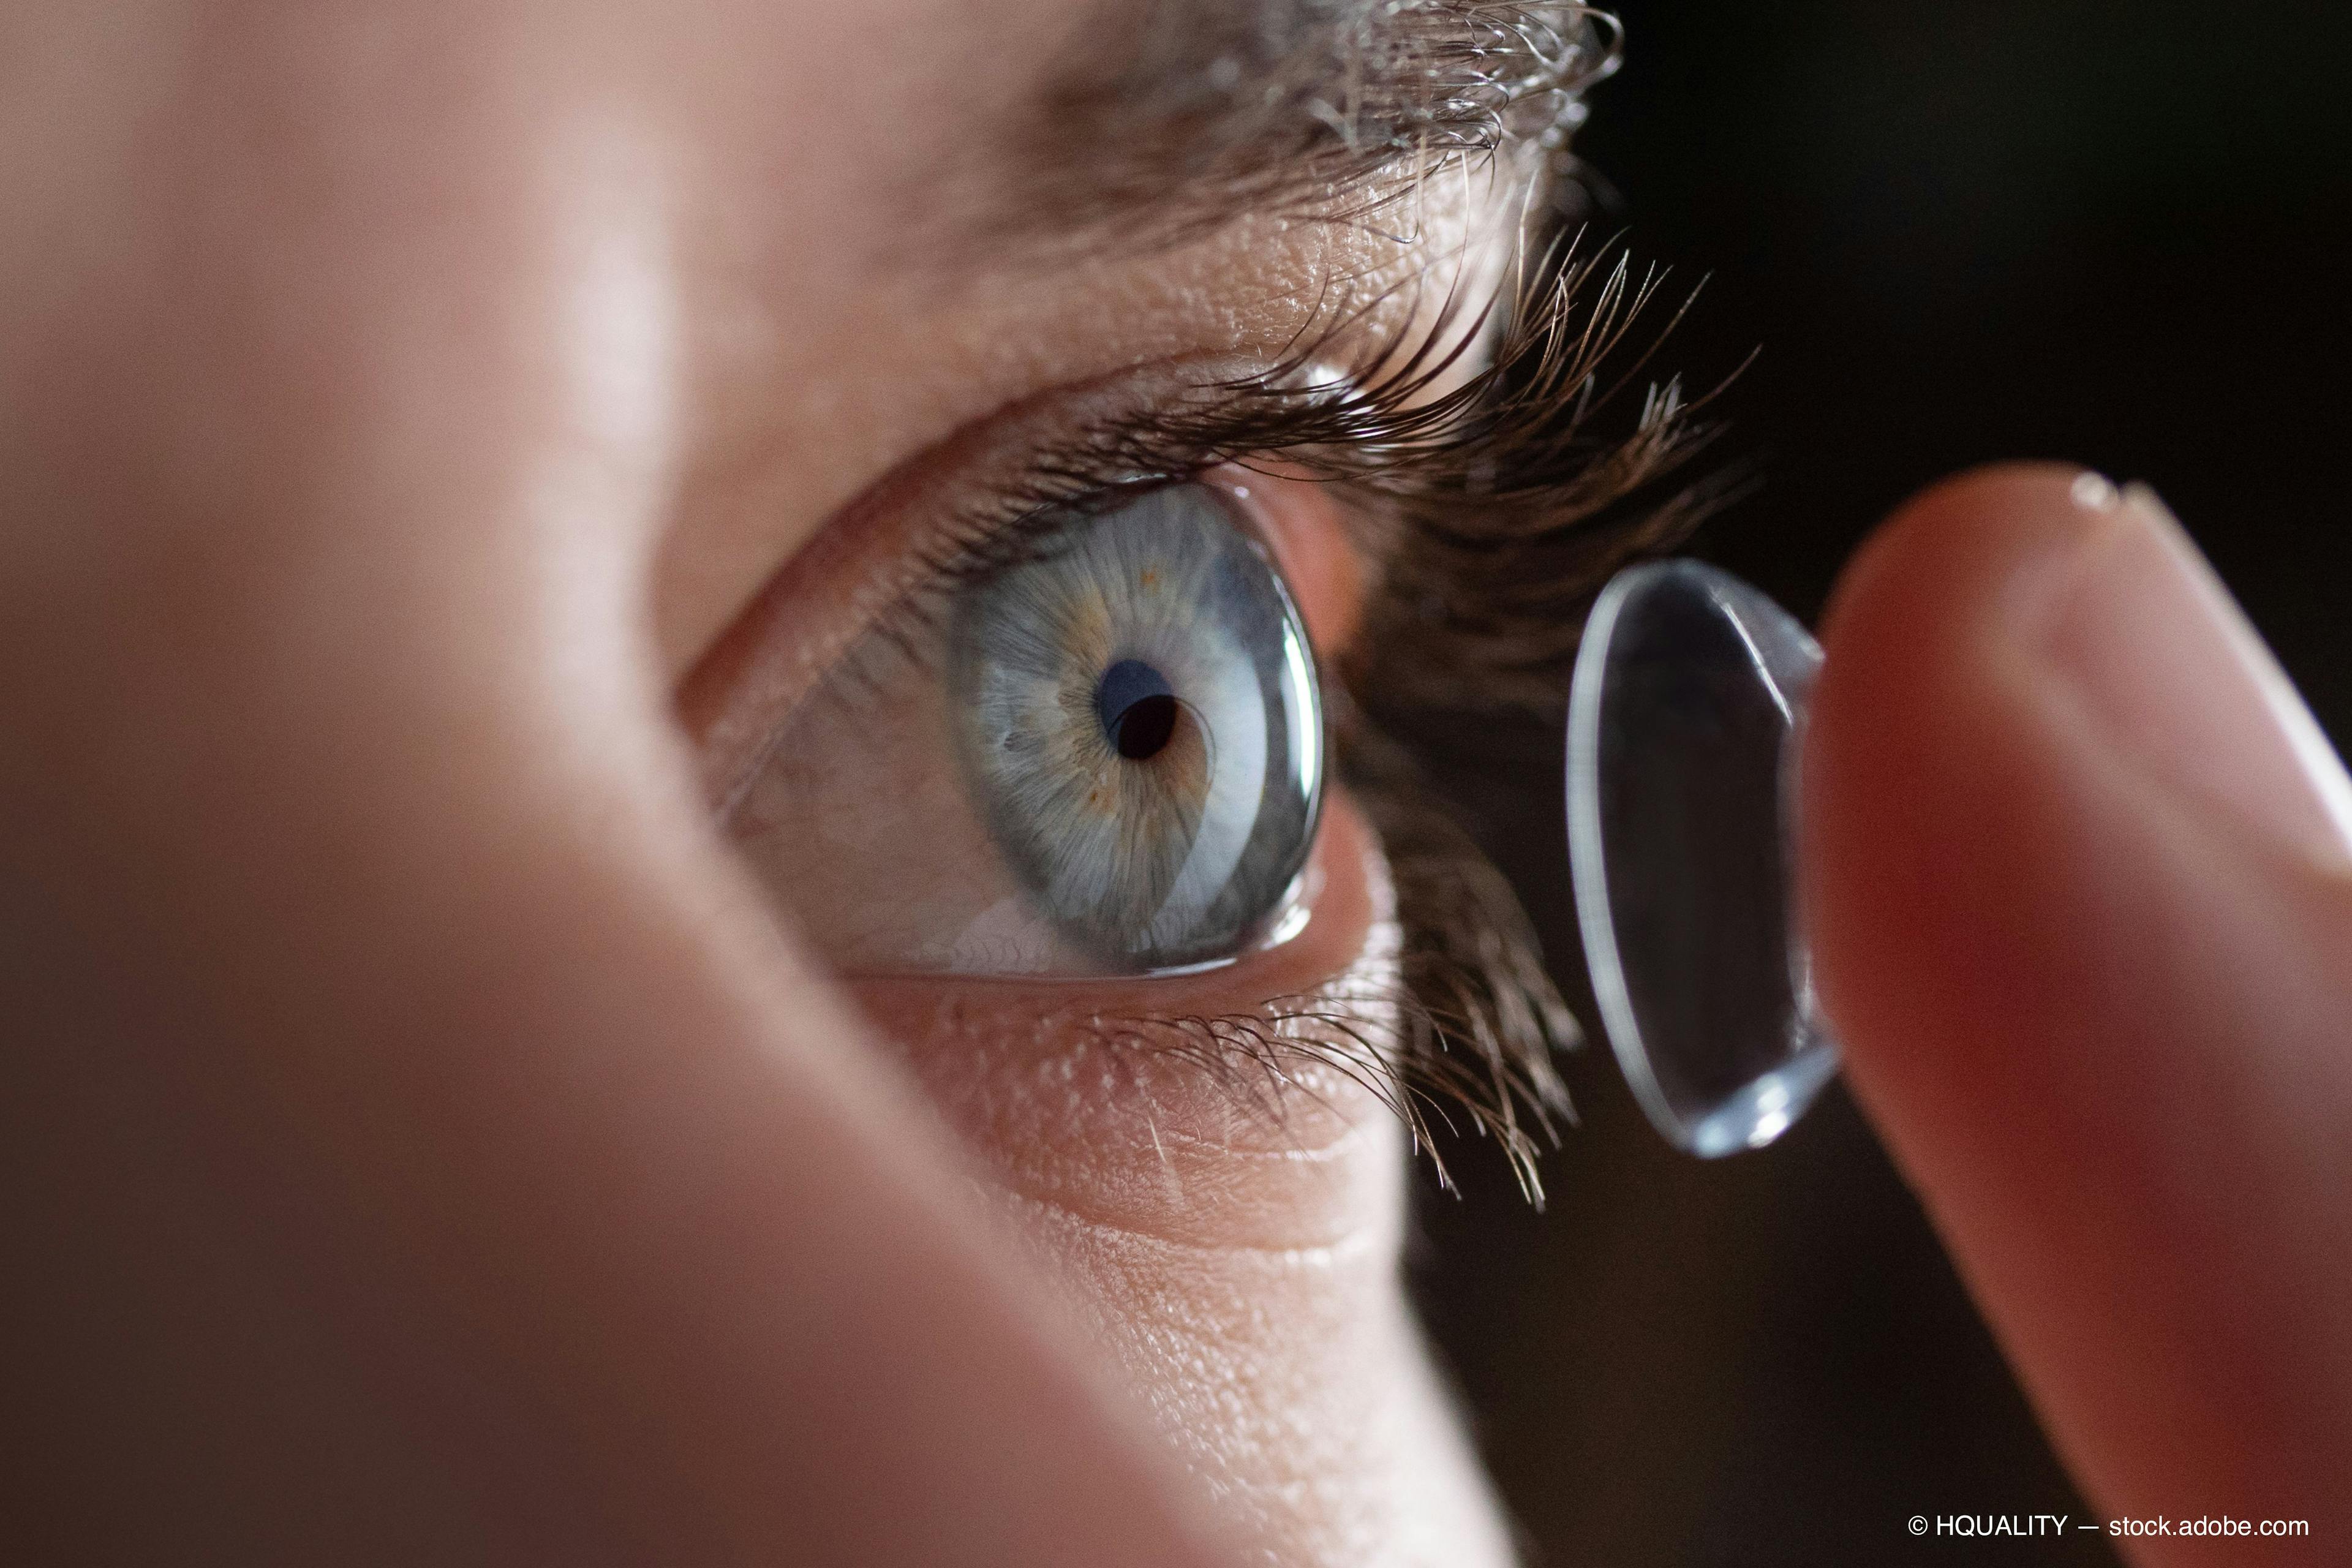 Modernize contact lens wear in 2019